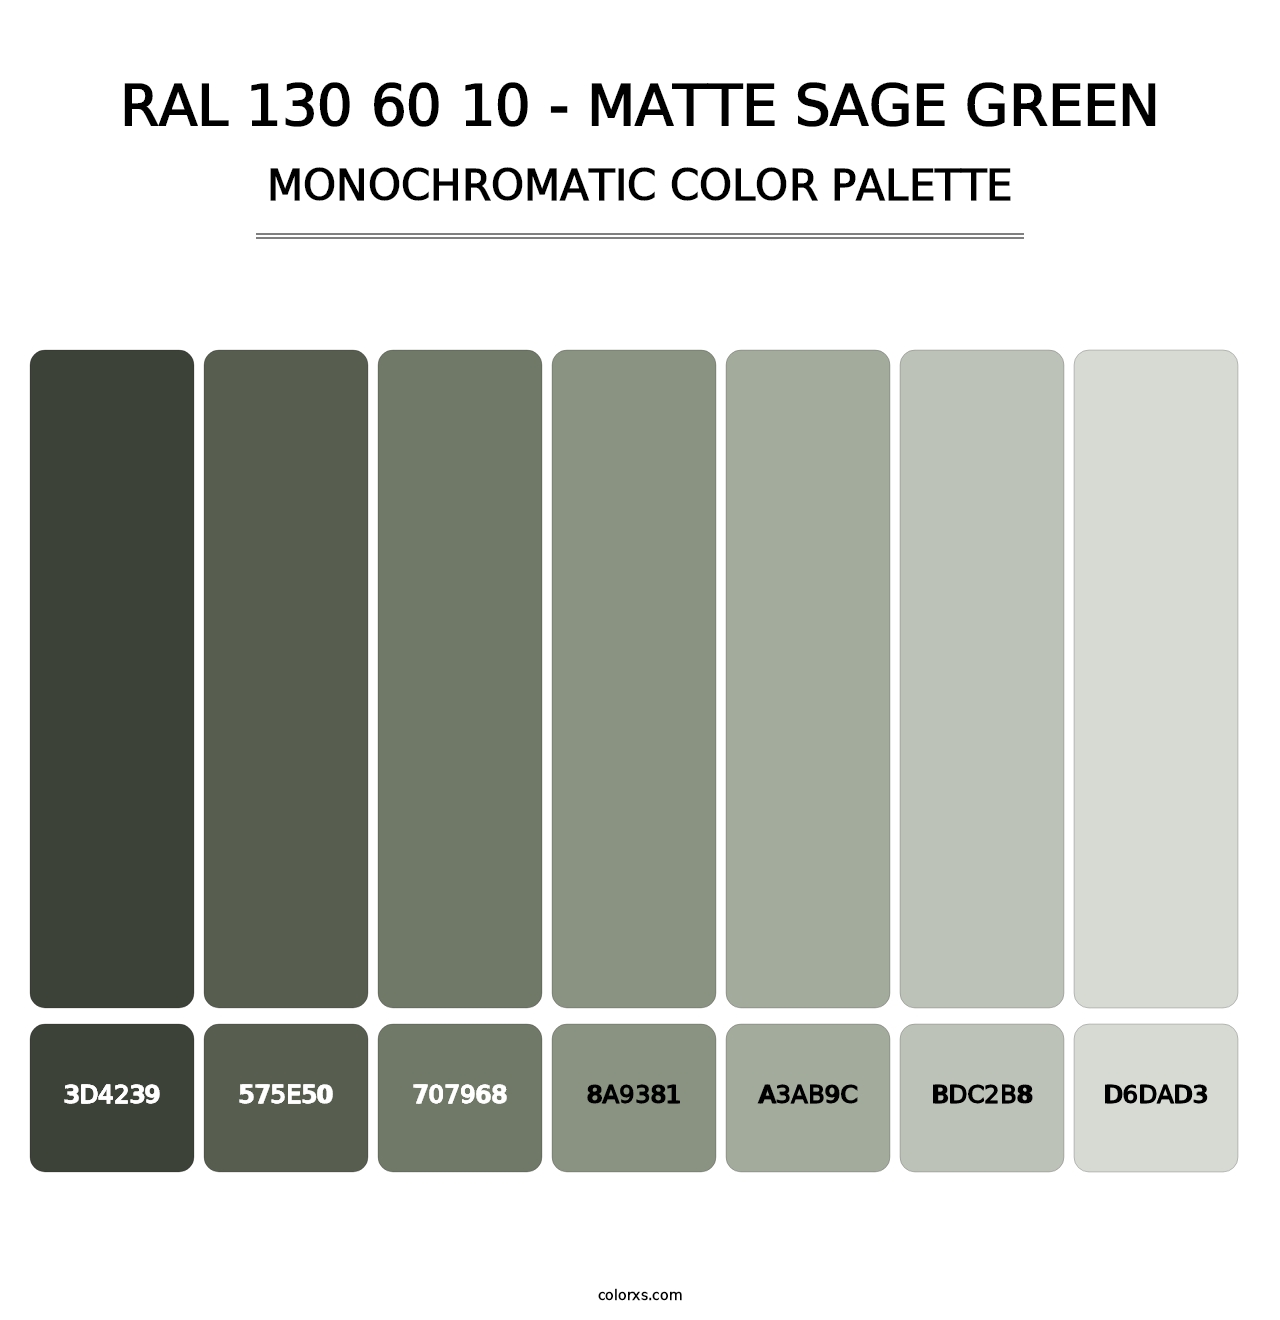 RAL 130 60 10 - Matte Sage Green - Monochromatic Color Palette